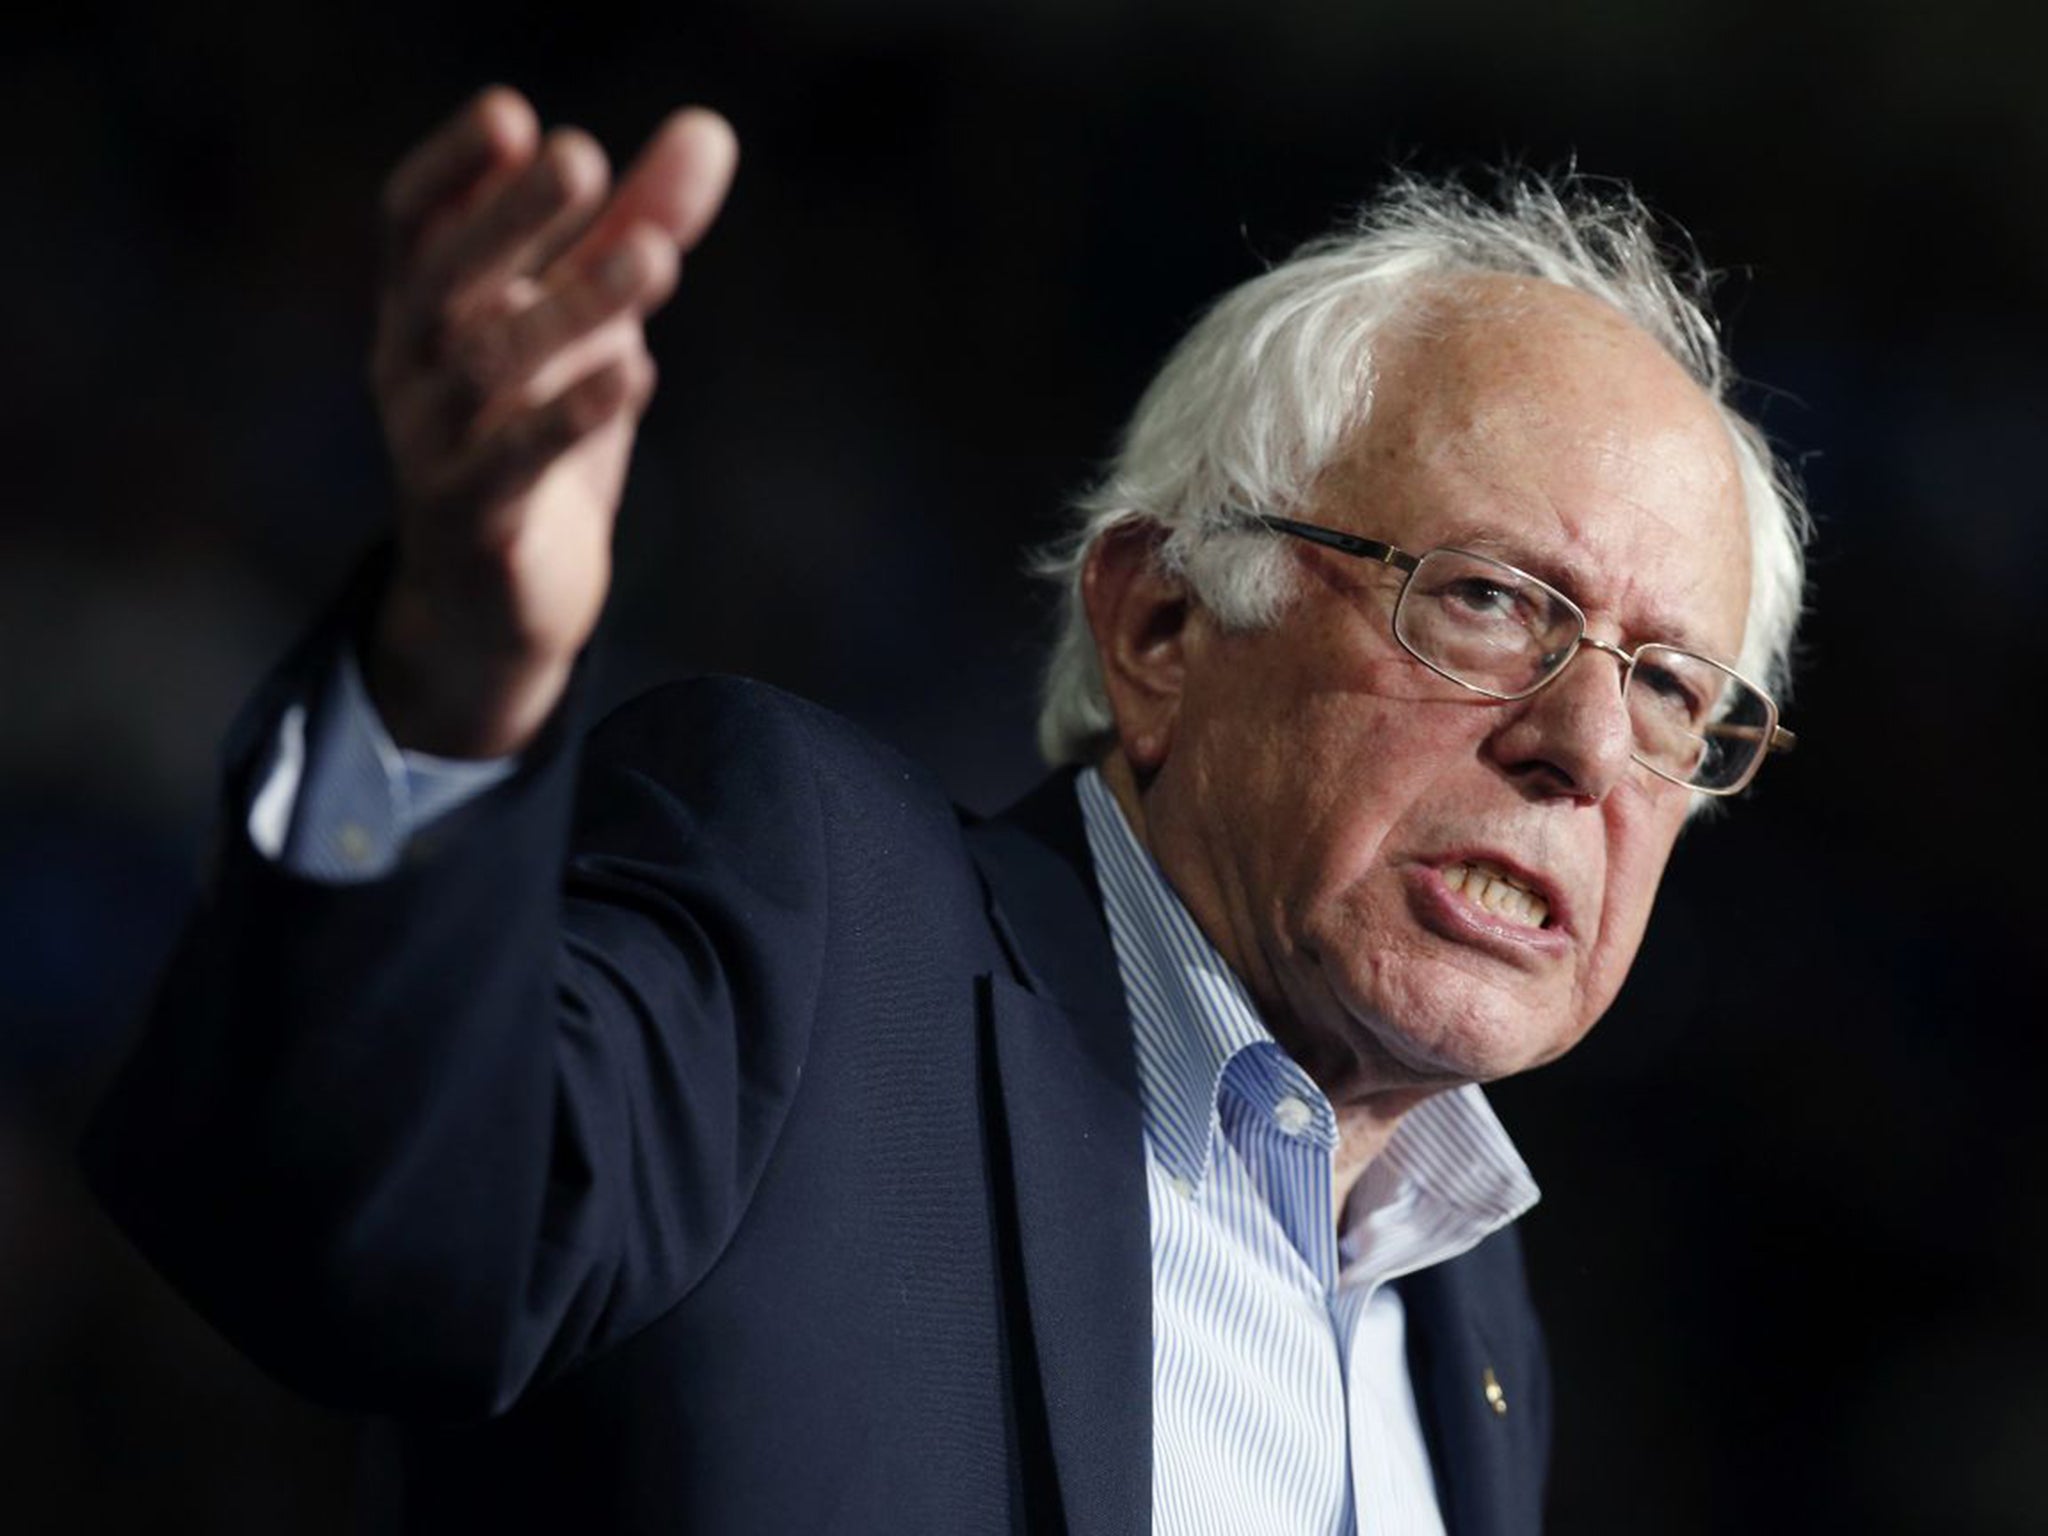 Bernie Sanders, the self-described Democratic Socialist Senator from Vermont